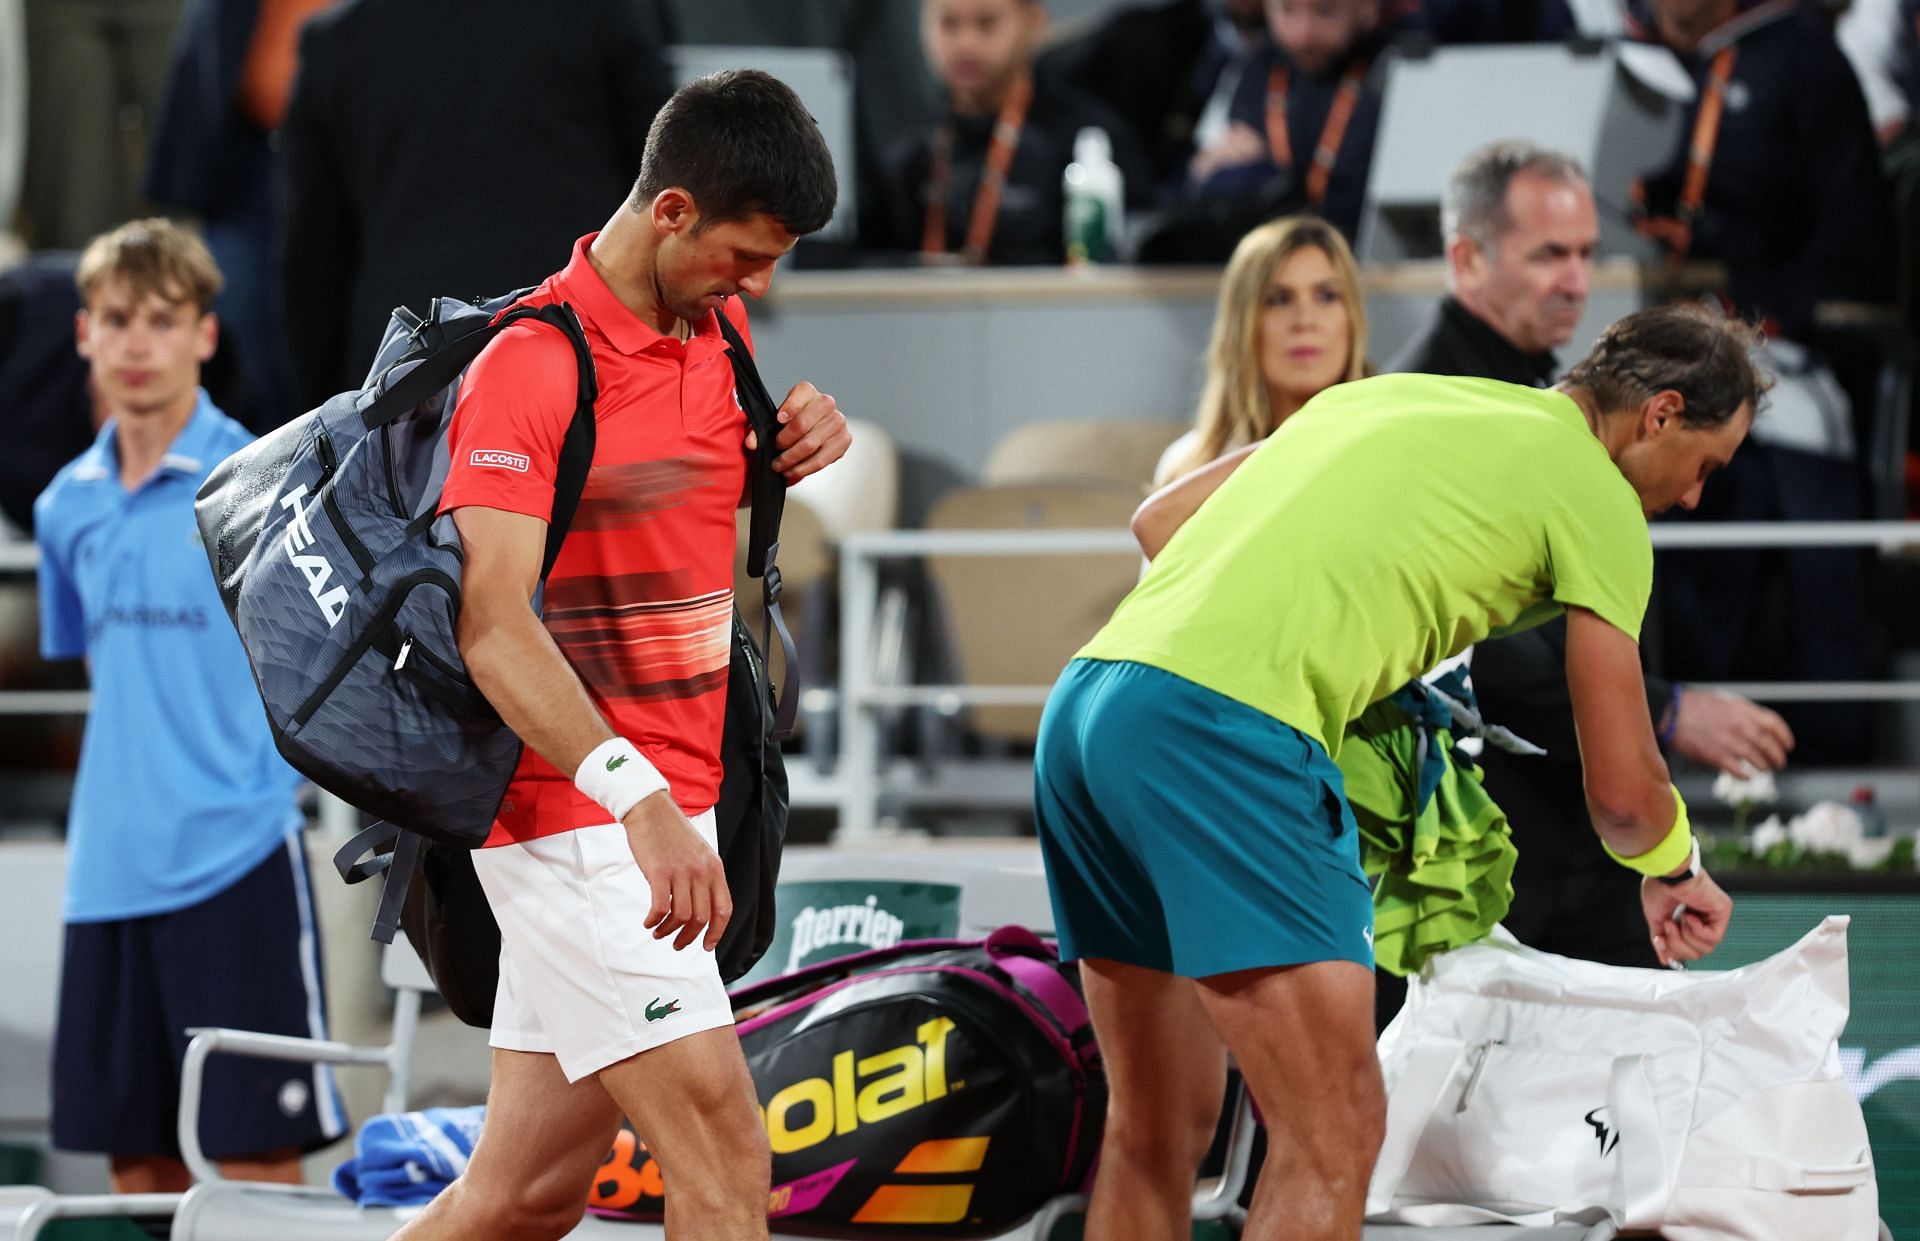 2022 French Open - Novak Djokovic and Rafael Nadal